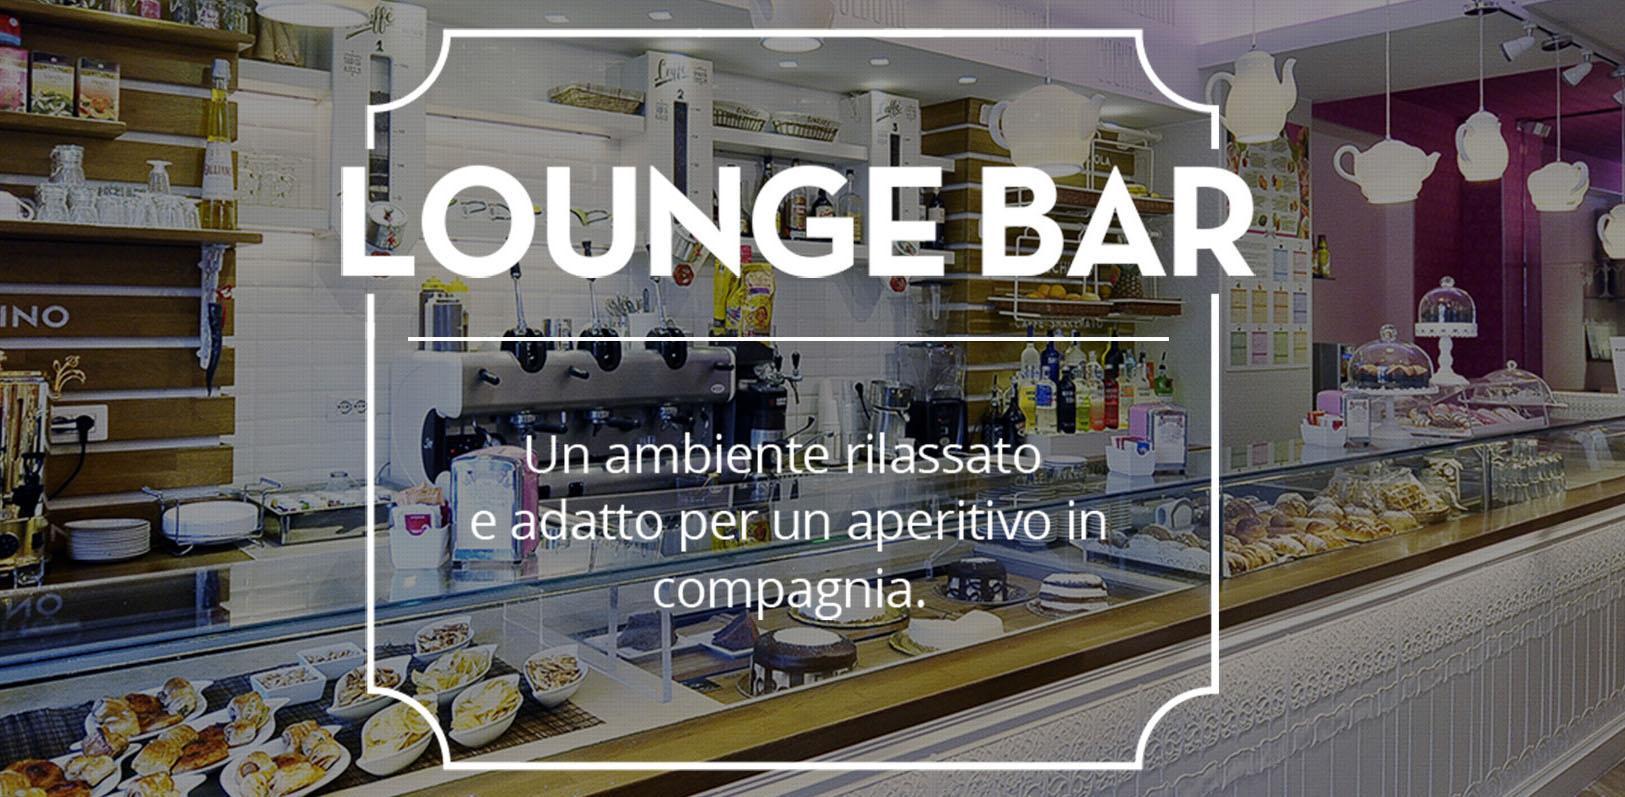 Fantasia Gelati - Lounge Bar, Aperitivo